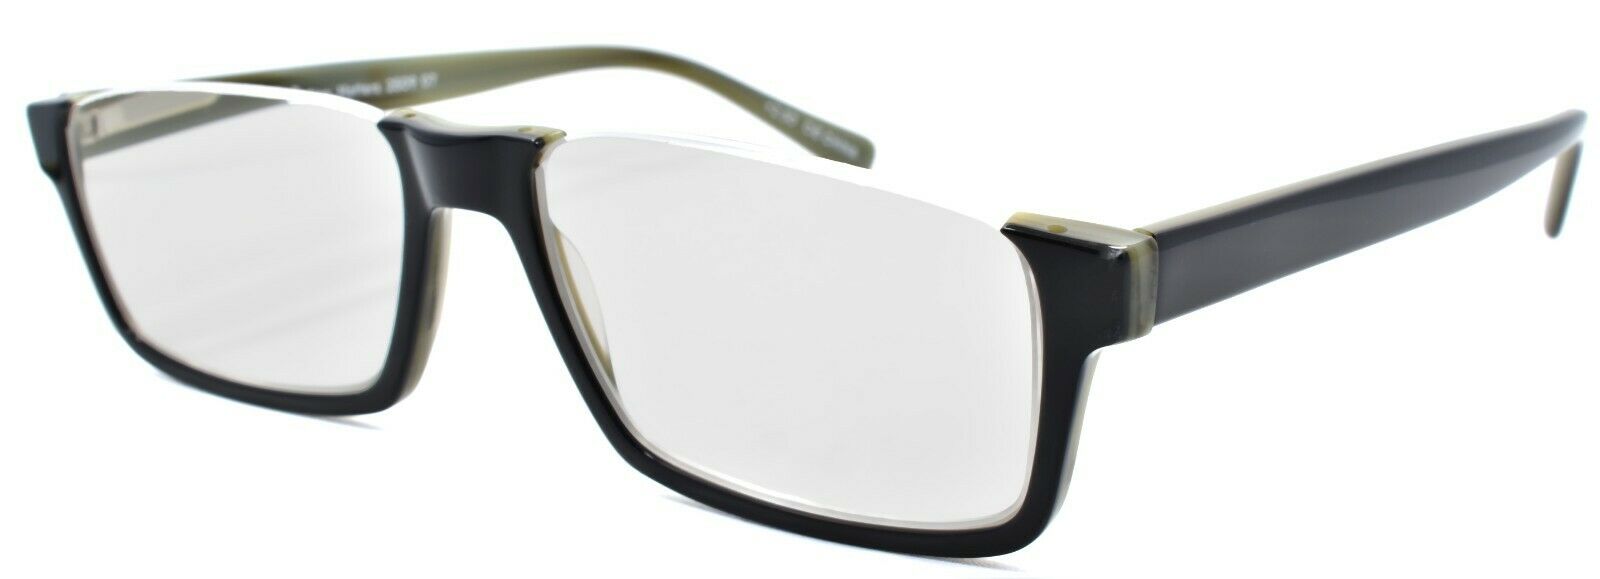 1-Eyebobs Size Matters 2509 07 Men's Reading Glasses Semi-Rimless Black Horn +1.50-842754109642-IKSpecs